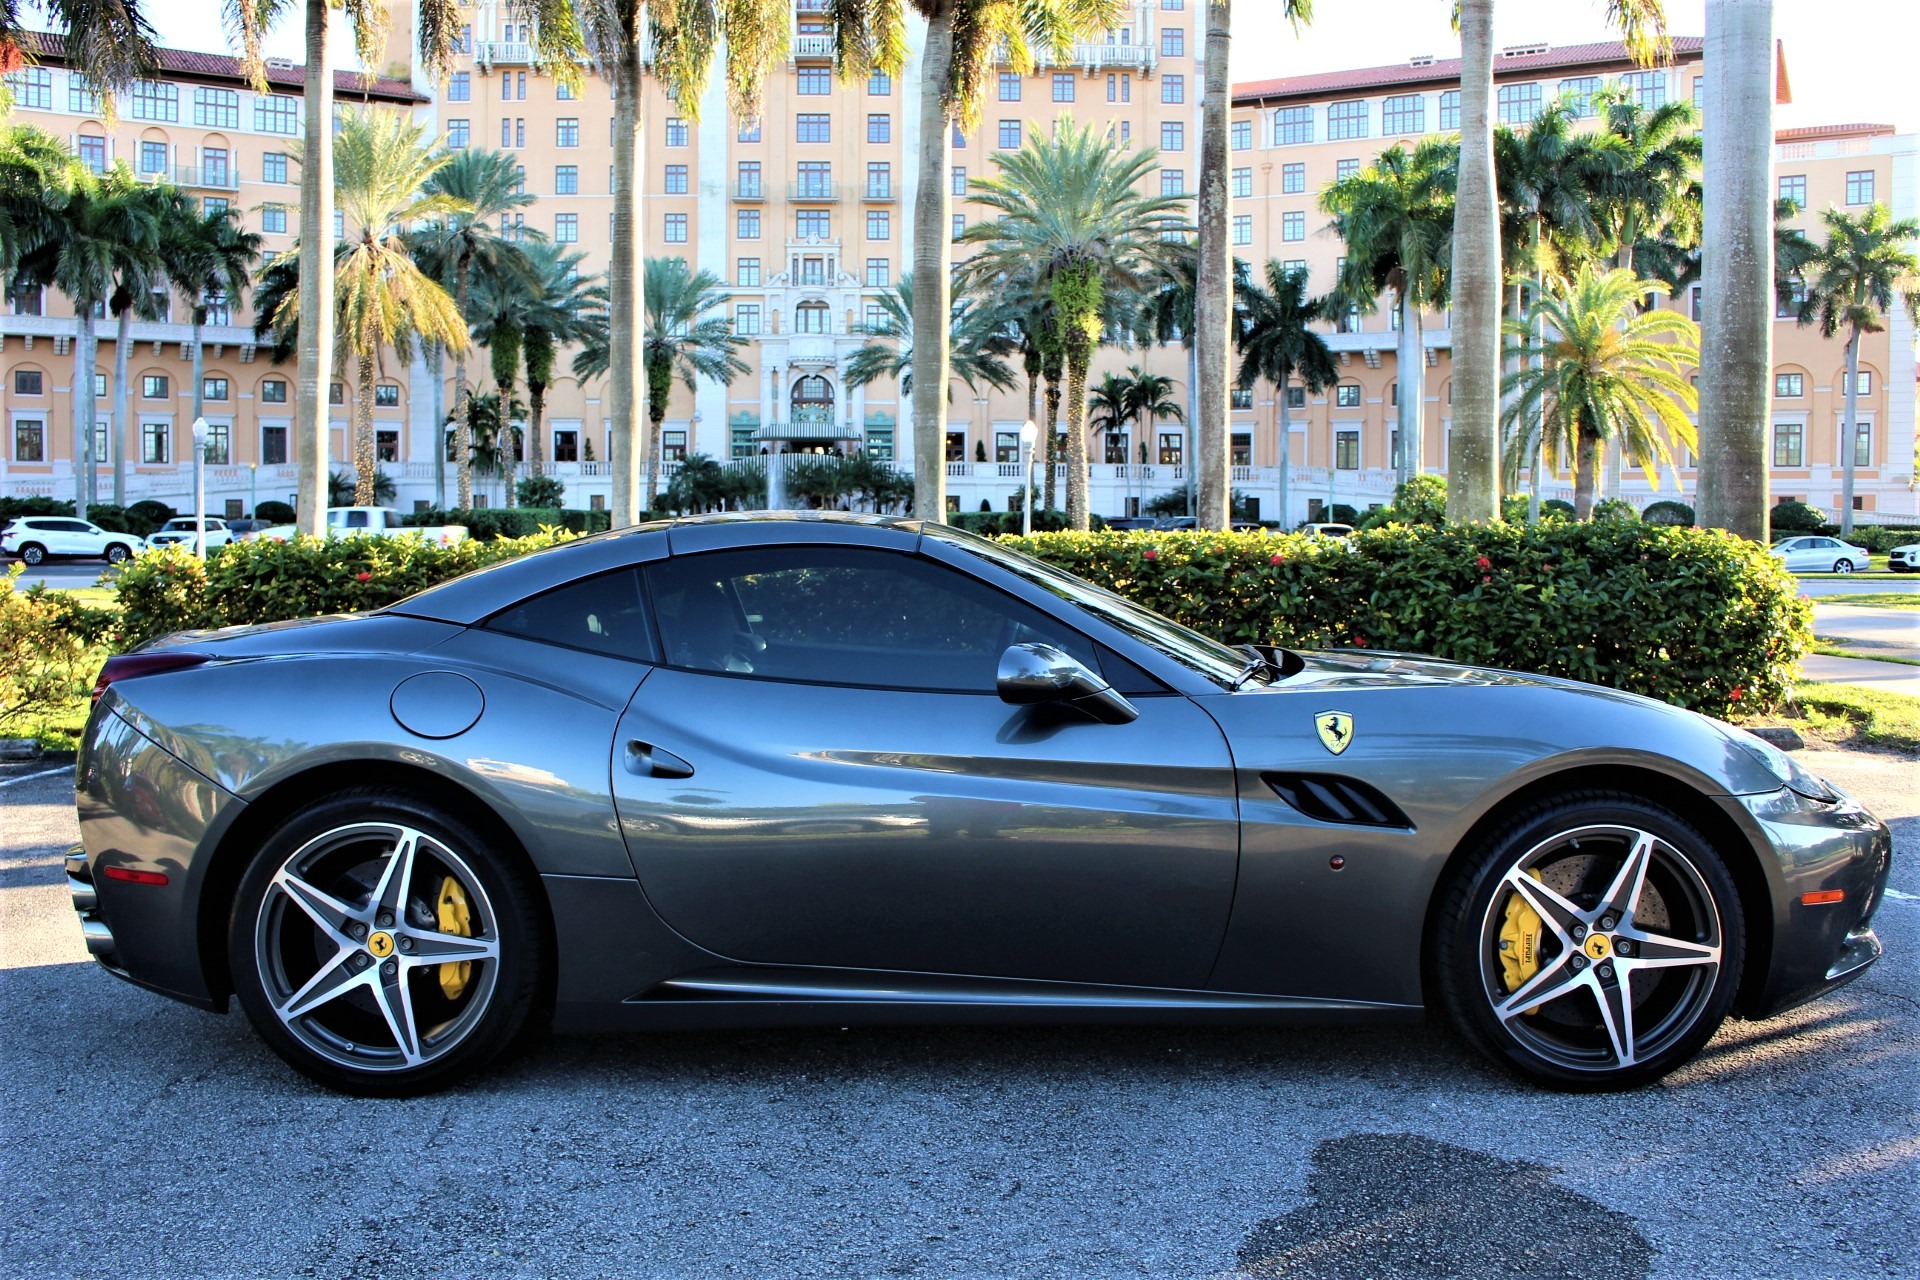 Used 2011 Ferrari California for sale Sold at The Gables Sports Cars in Miami FL 33146 2